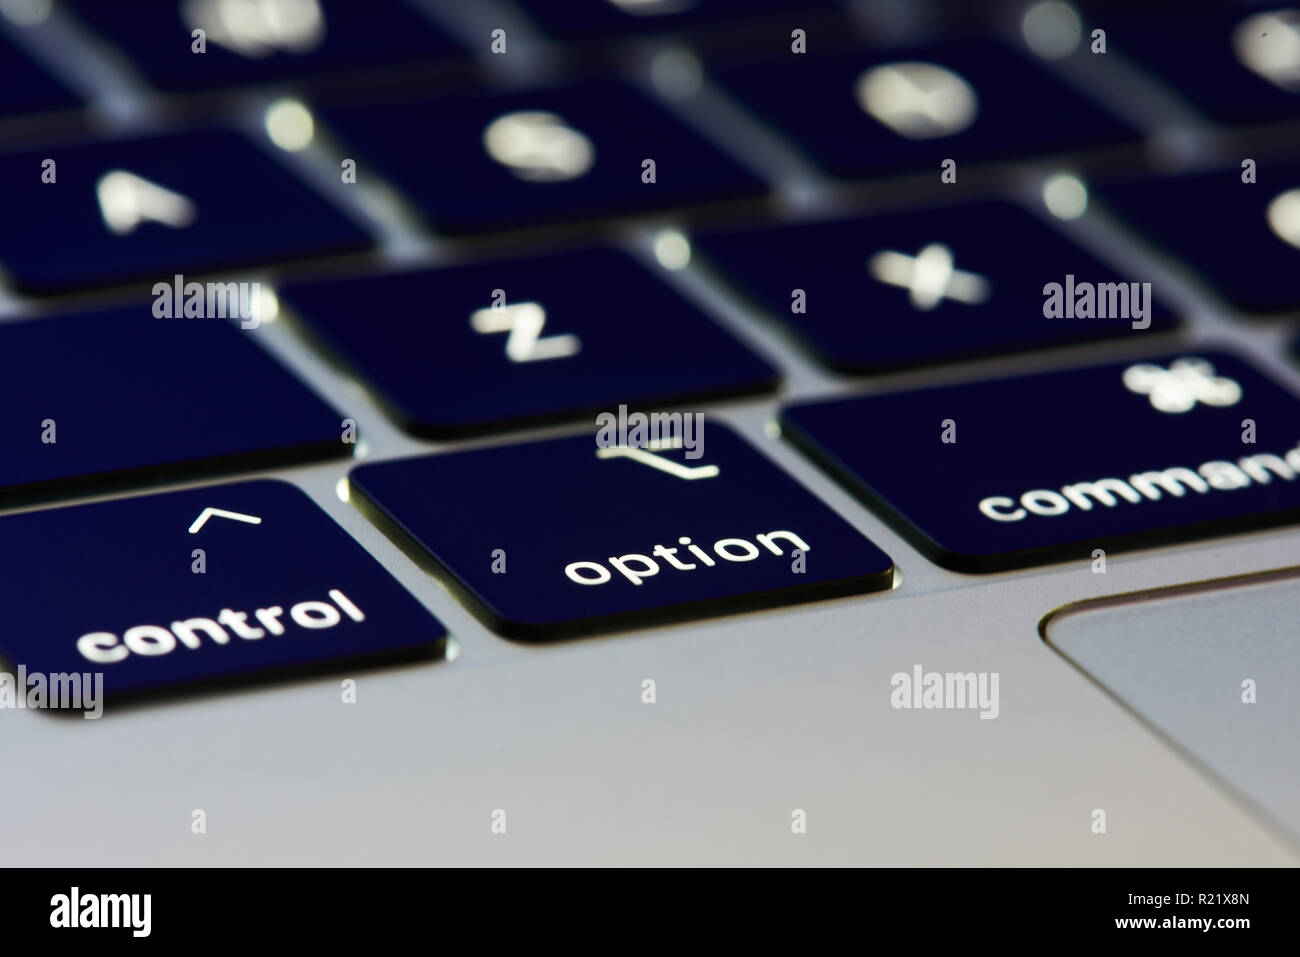 New york, USA - november 15, 2018:Option key on macbook pro keyboard close up view Stock Photo